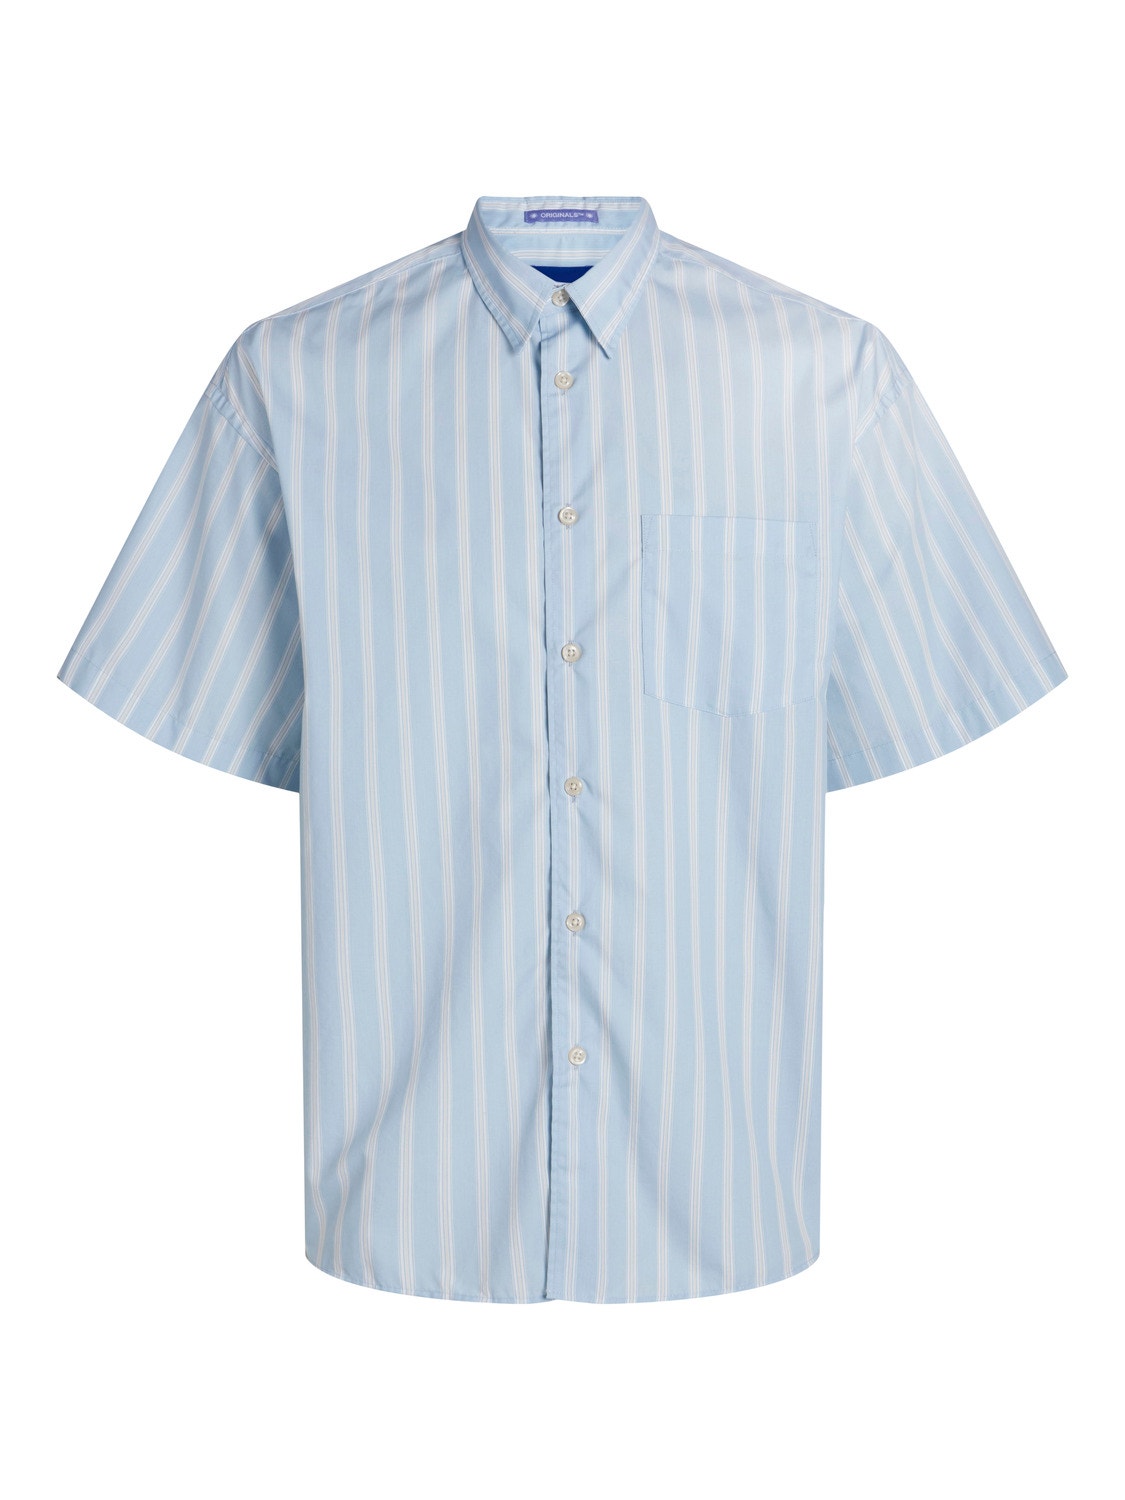 Jack & Jones Oversize Fit Overhemd -Cashmere Blue - 12255213